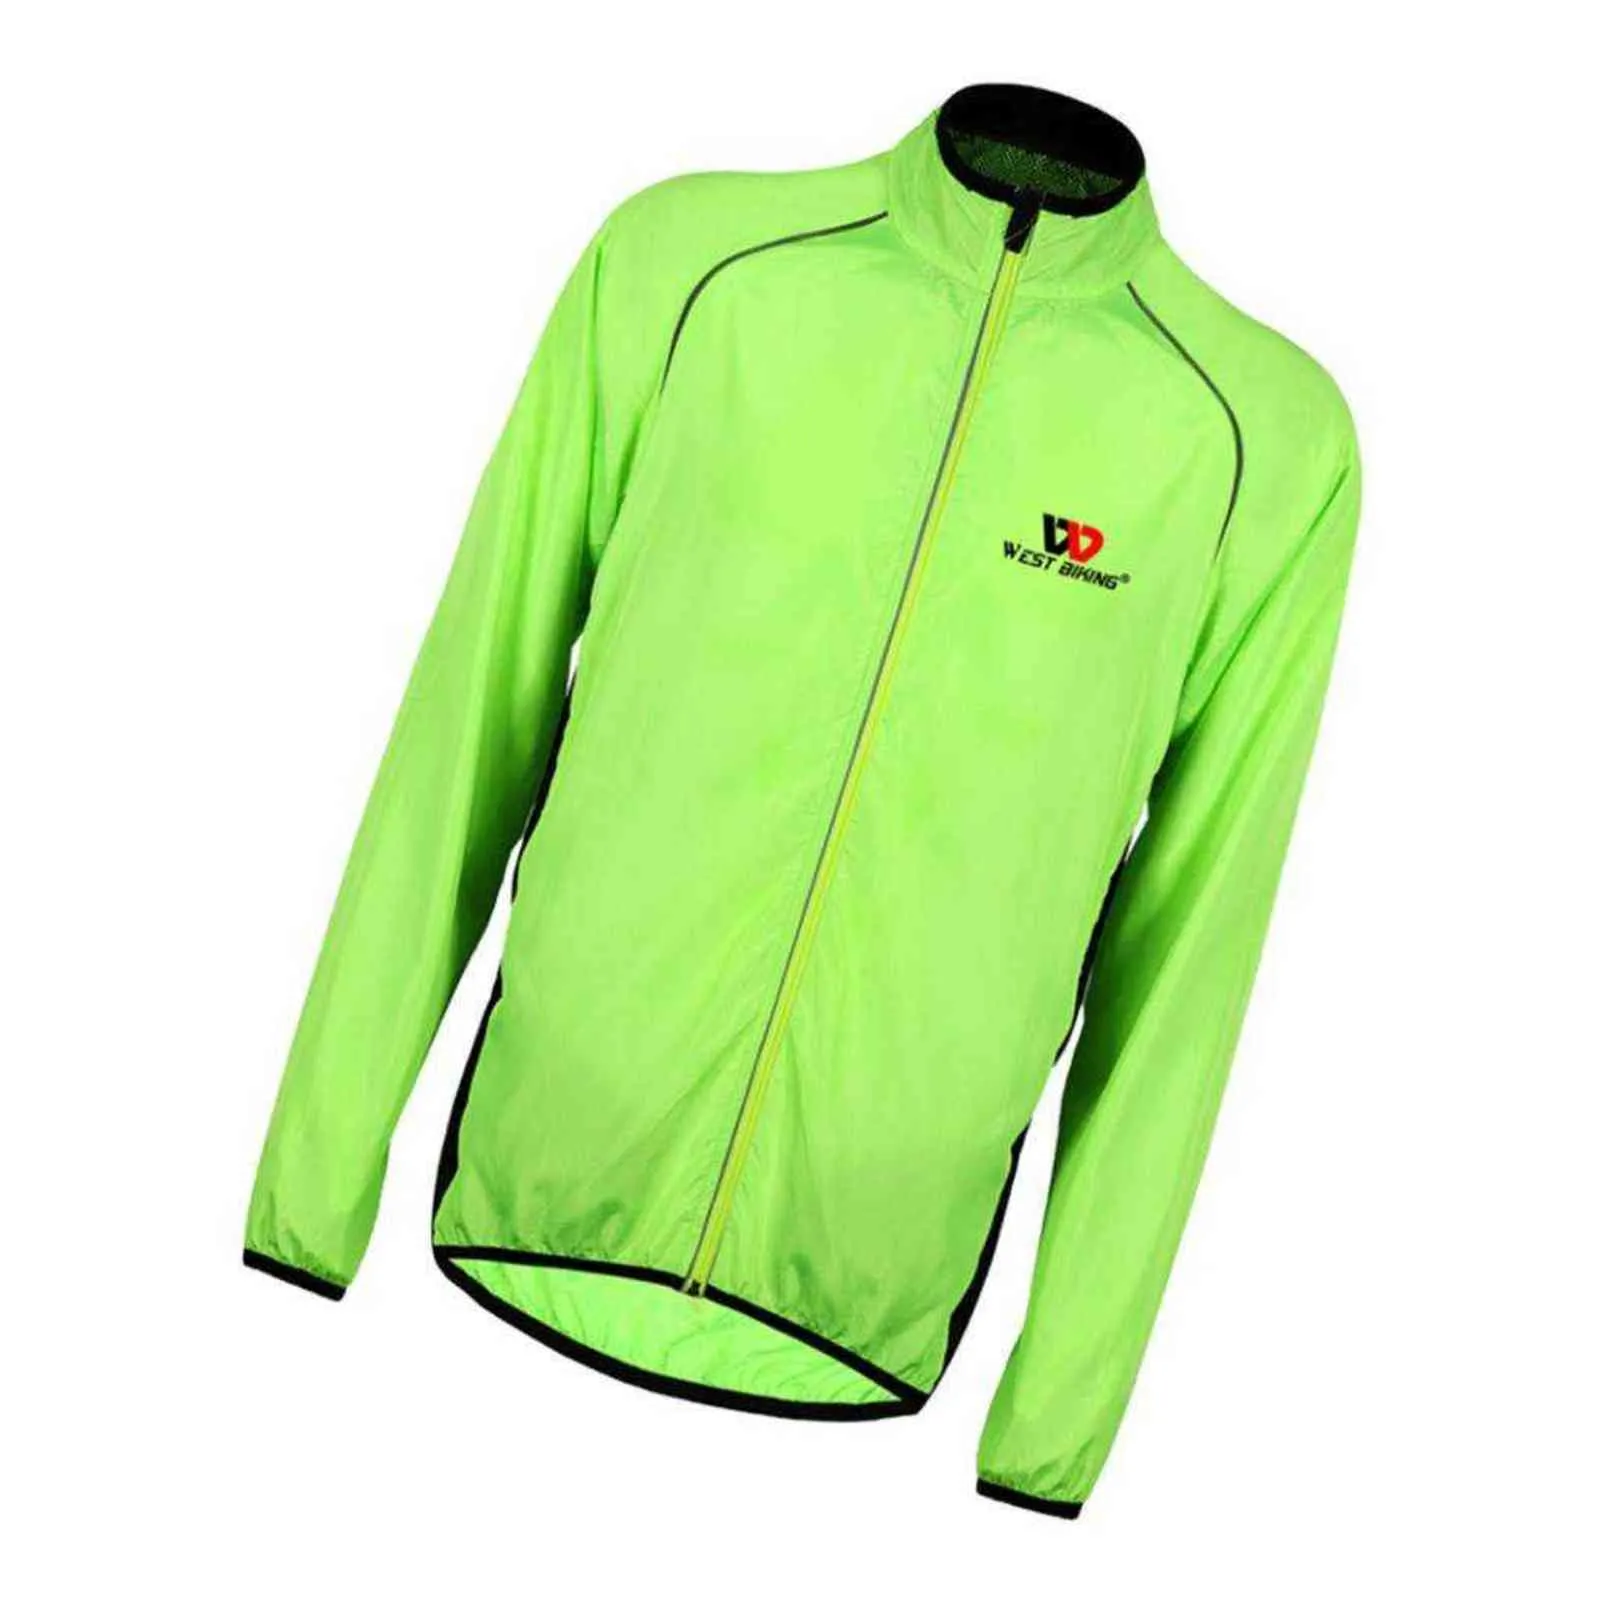 Mens Cycling Jacket Windproof Waterproof Long Sleeve Sports Cycling Jersey G1130